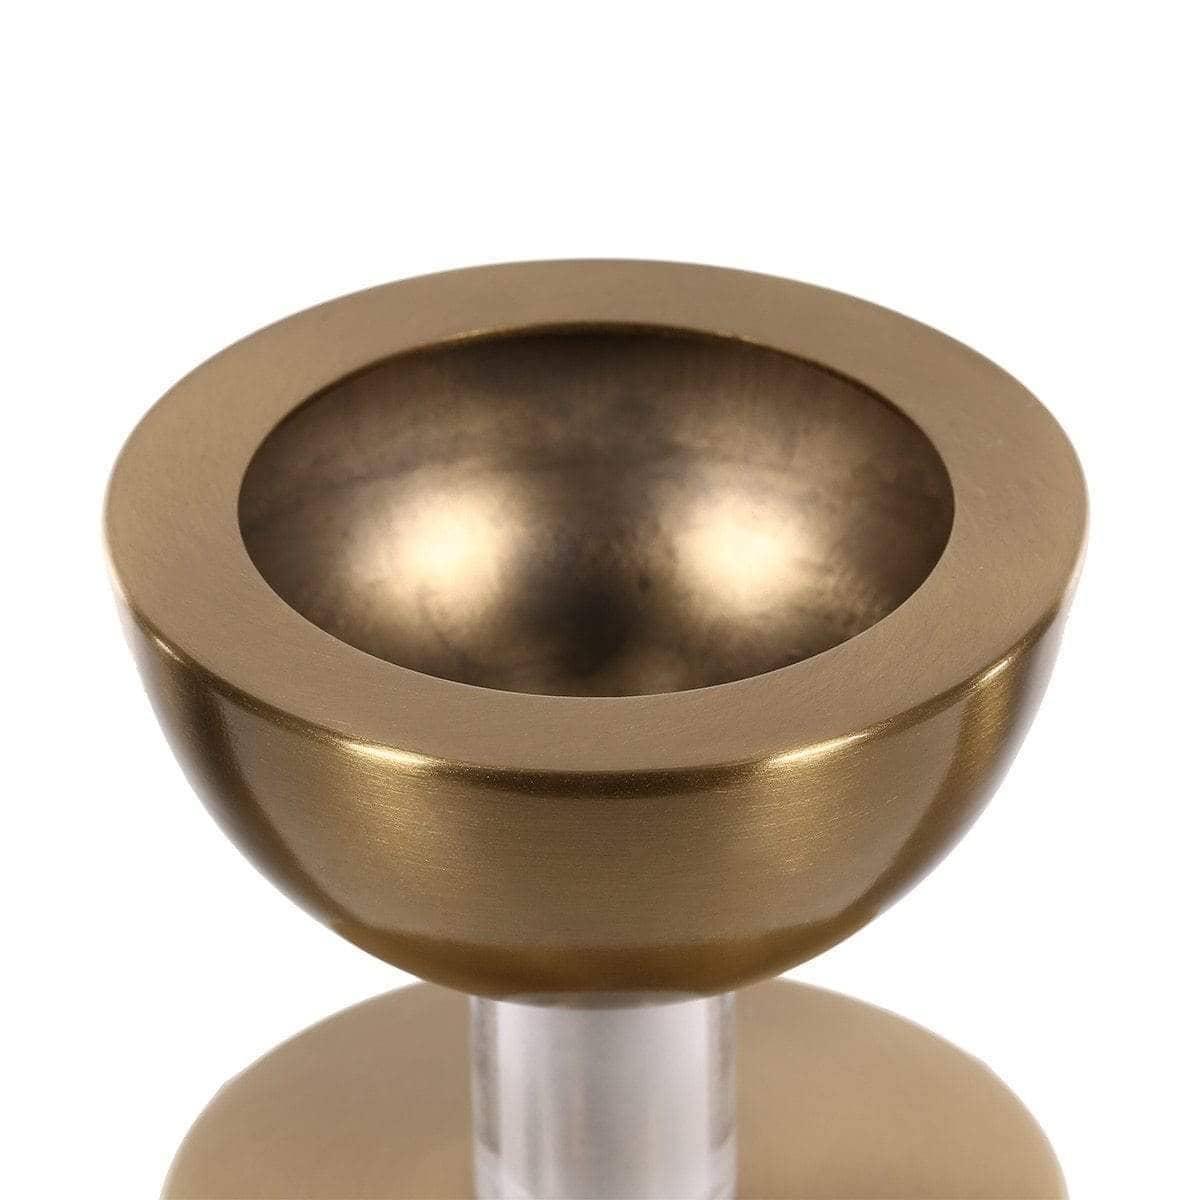 Semi-spherical Candlestick - Modern & Elegant Home Accent